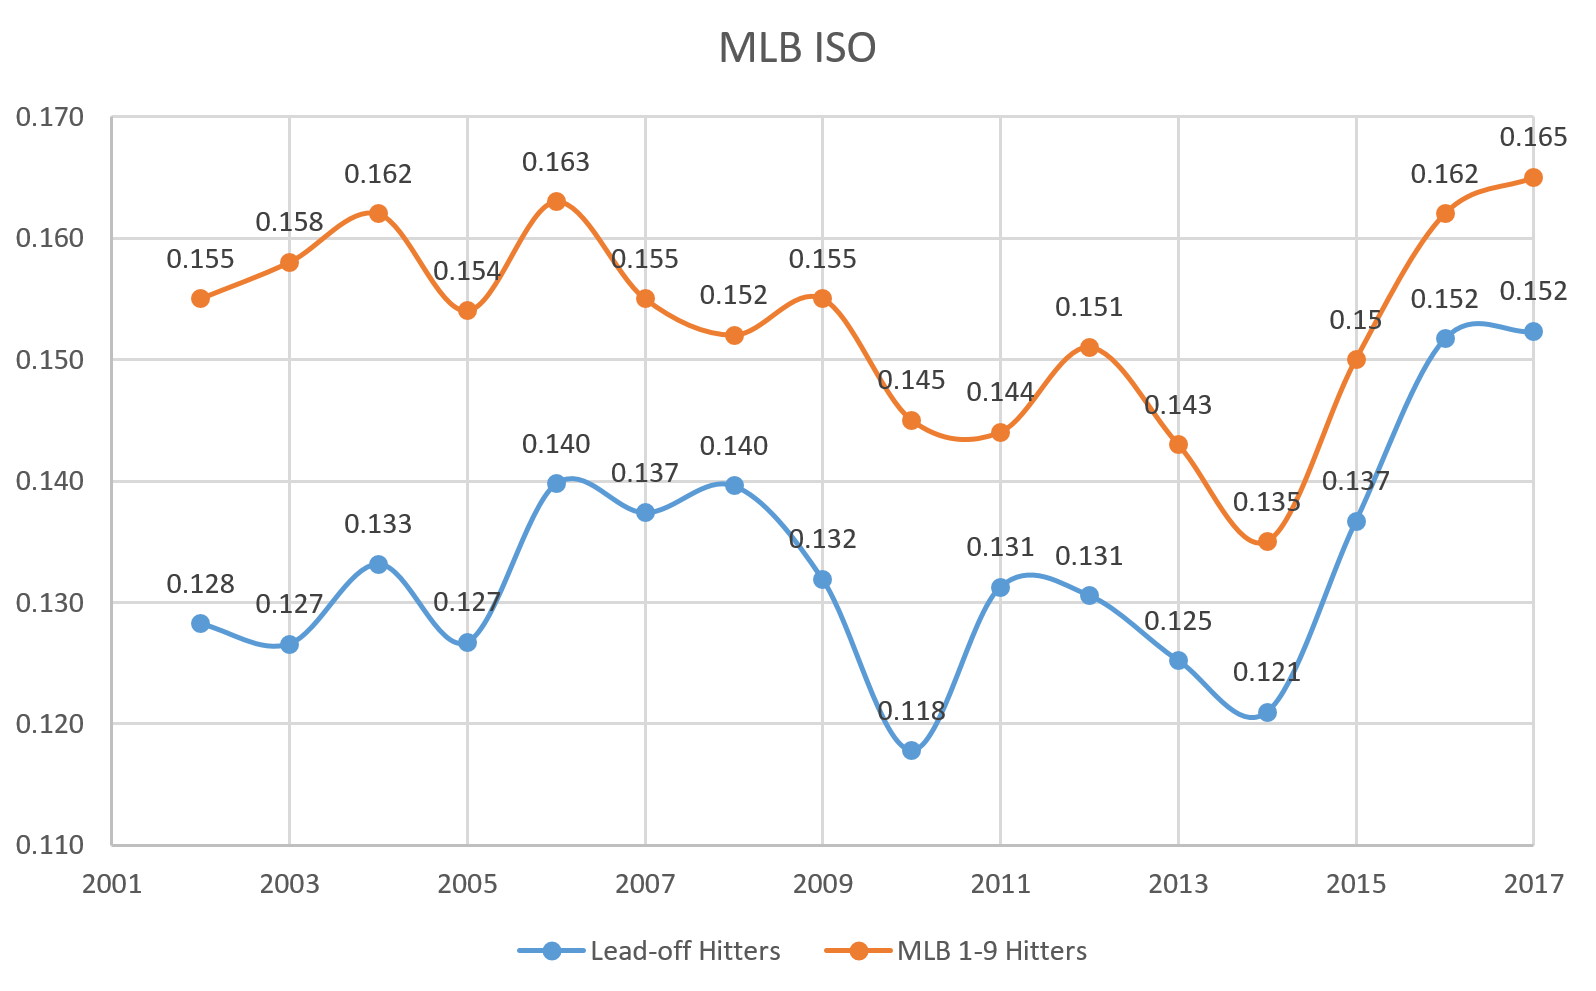 MLB Lead-off Hitters' ISO v. MLB ISO